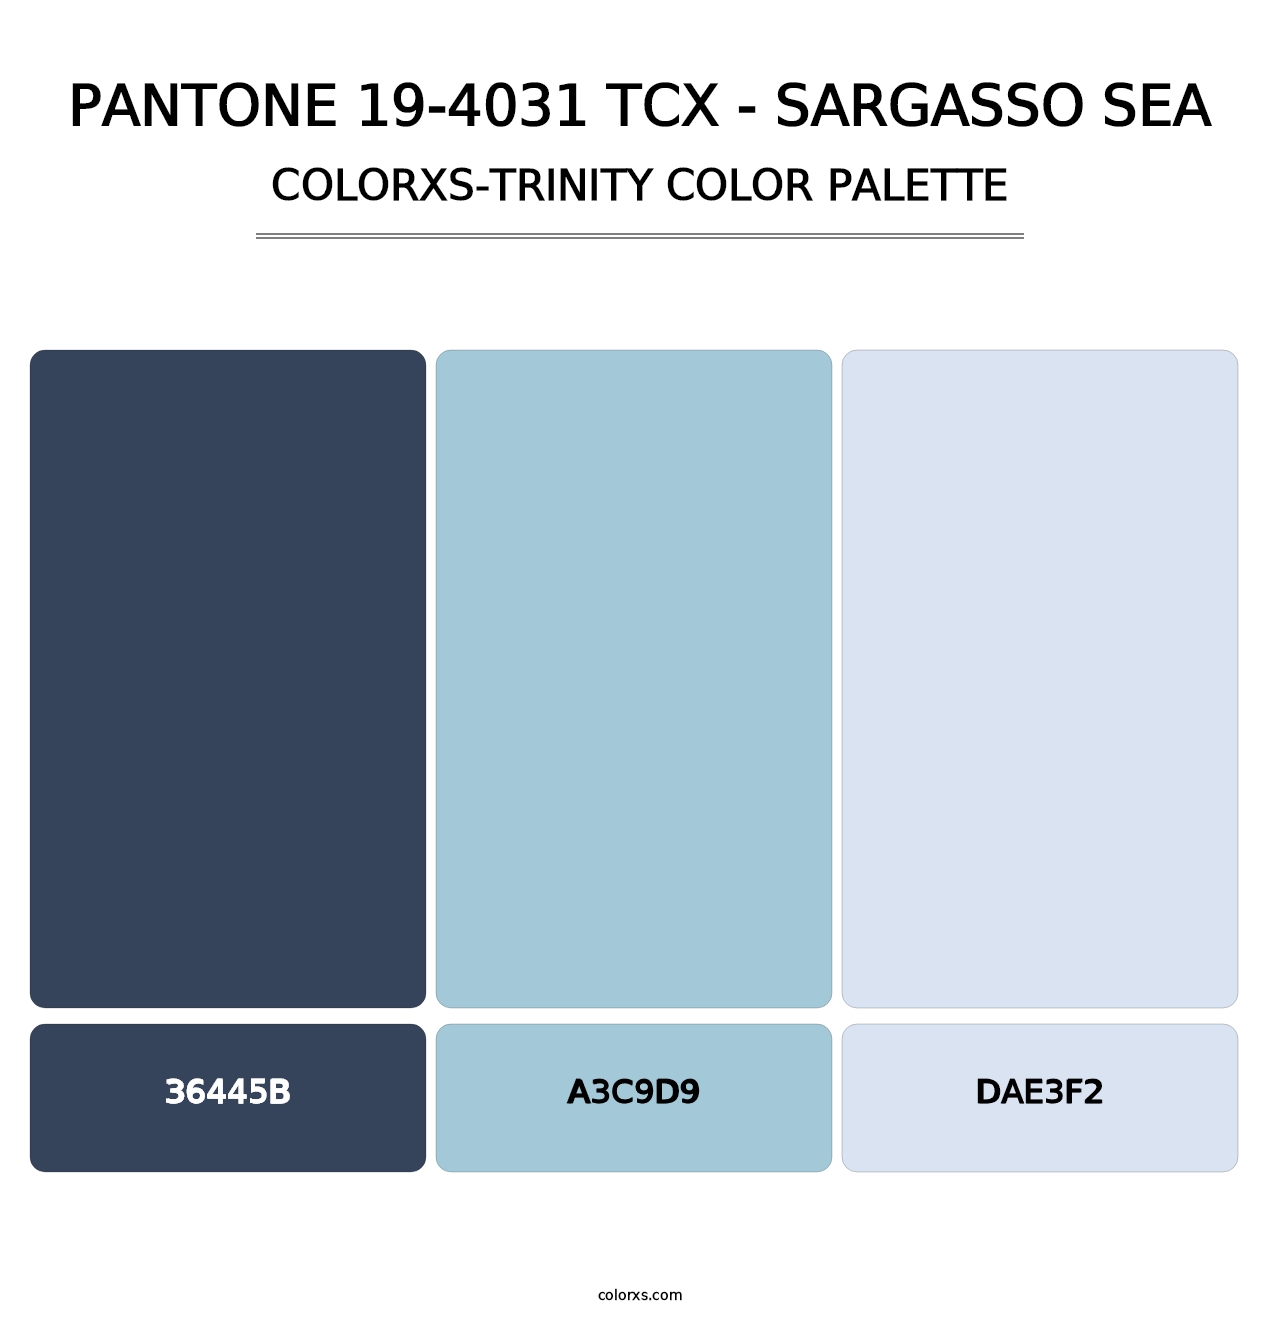 PANTONE 19-4031 TCX - Sargasso Sea - Colorxs Trinity Palette